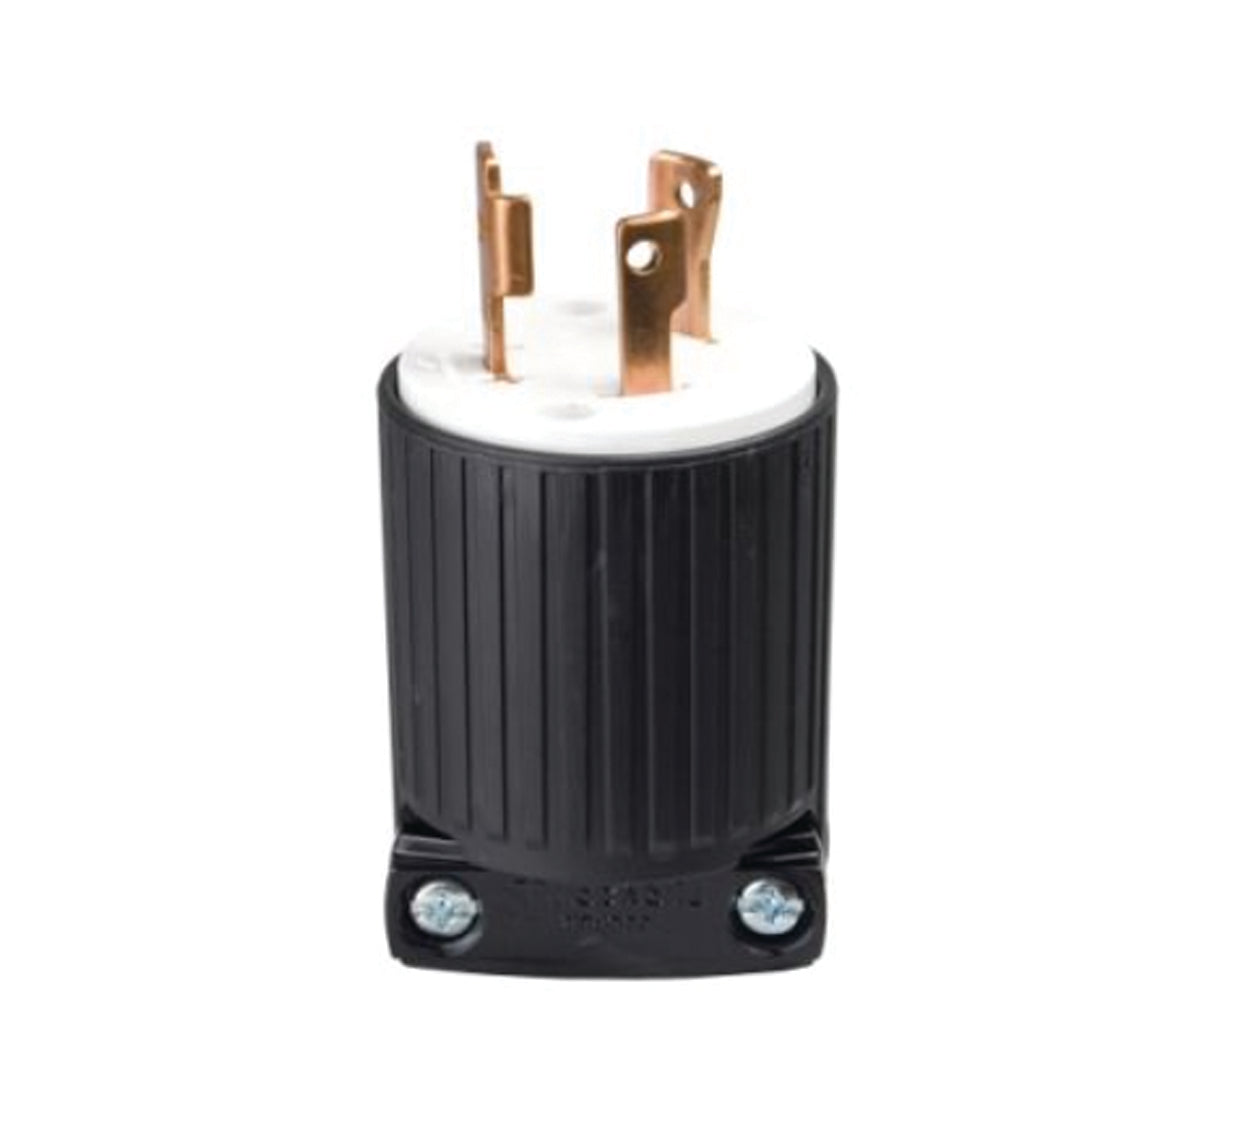 30 Amp Locking Plug, Industrial, NEMA L5-30, Black/White